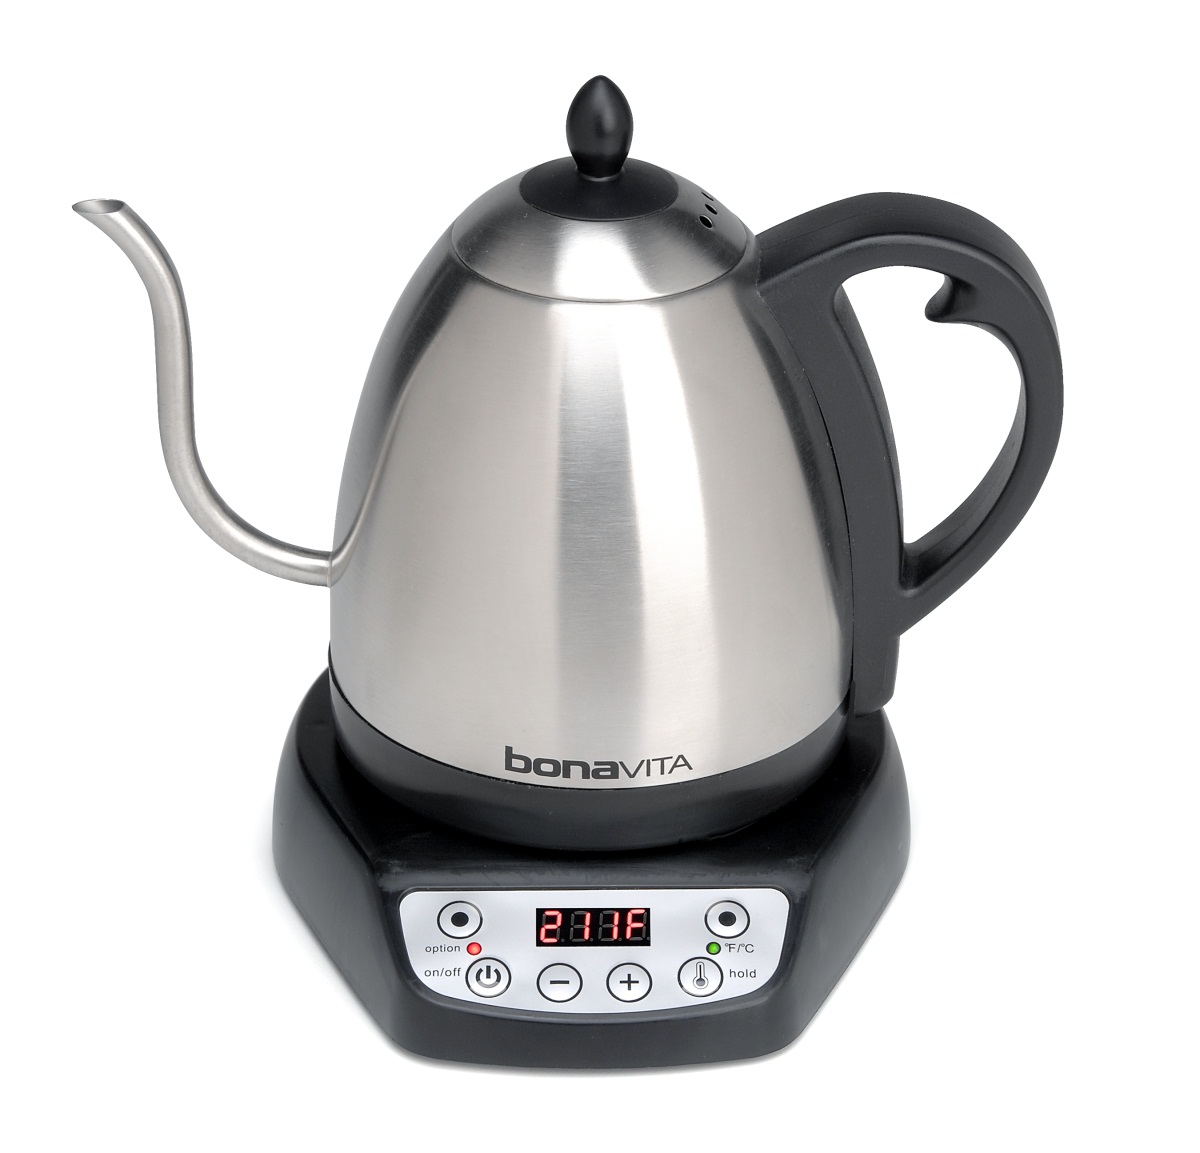 Bonavita's variable-temp gooseneck kettle. ($69)